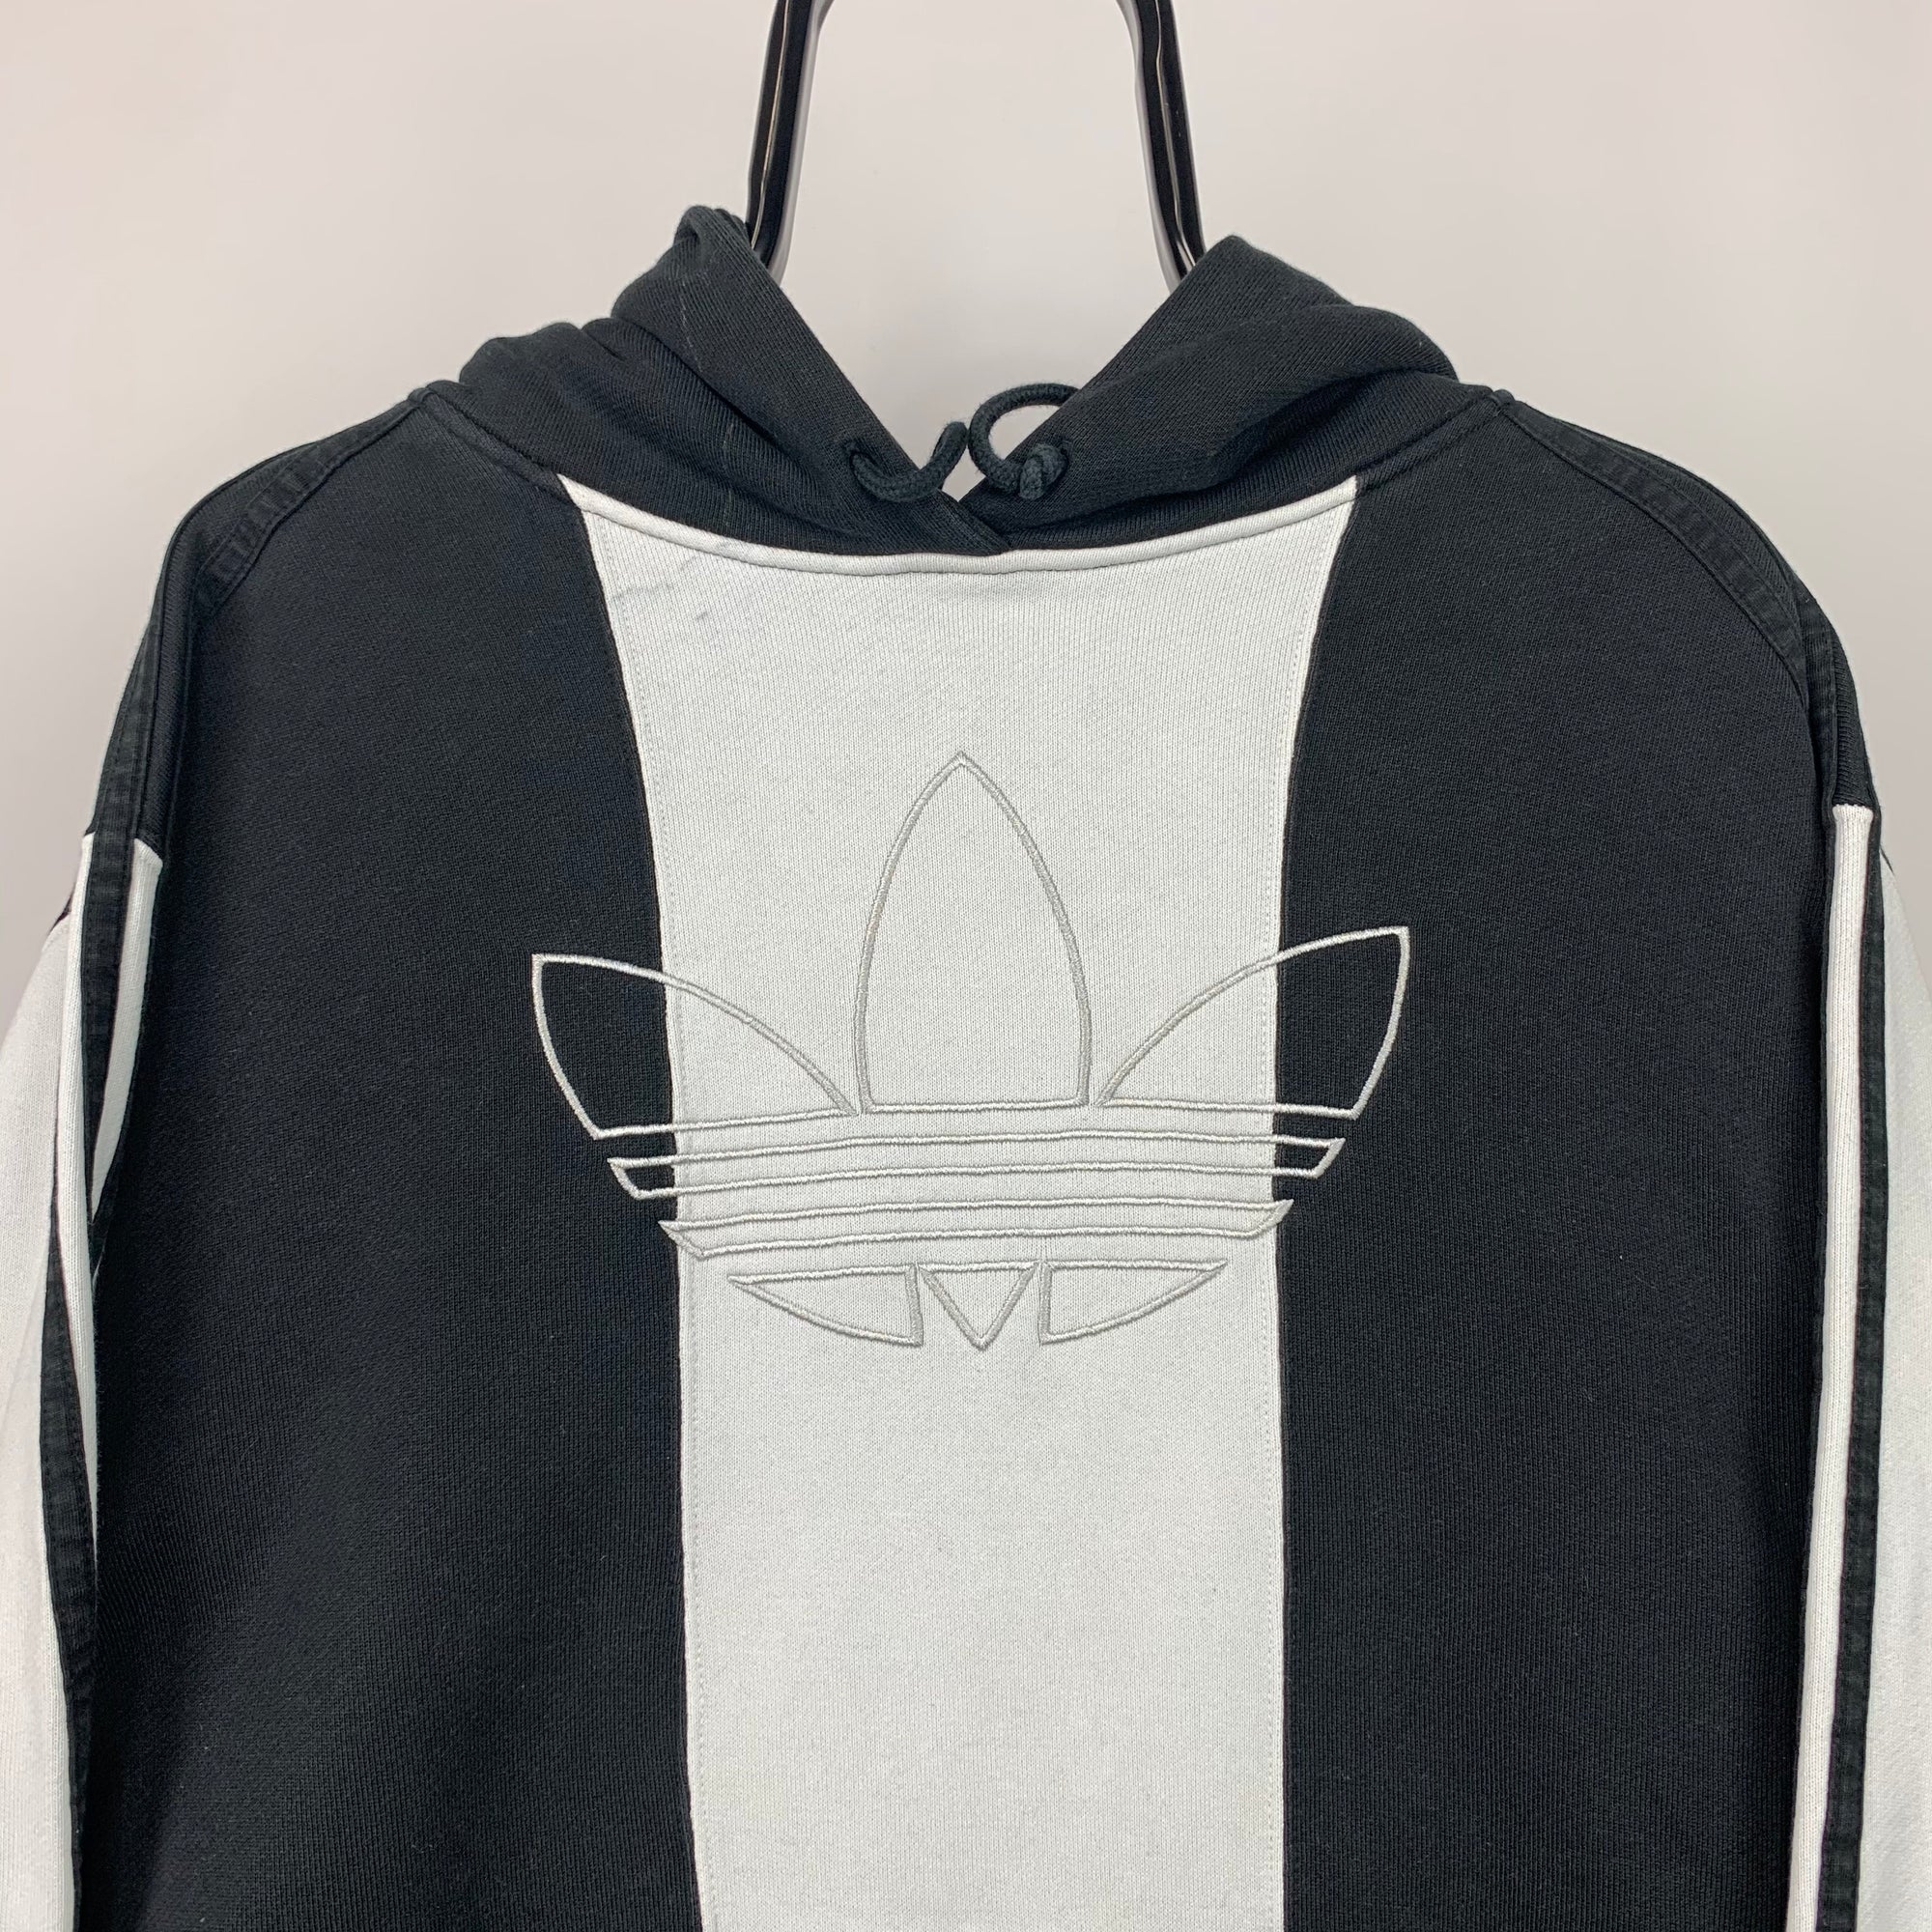 Adidas Embroidered Logo Hoodie in Black/White - Men's Medium/Women's Large